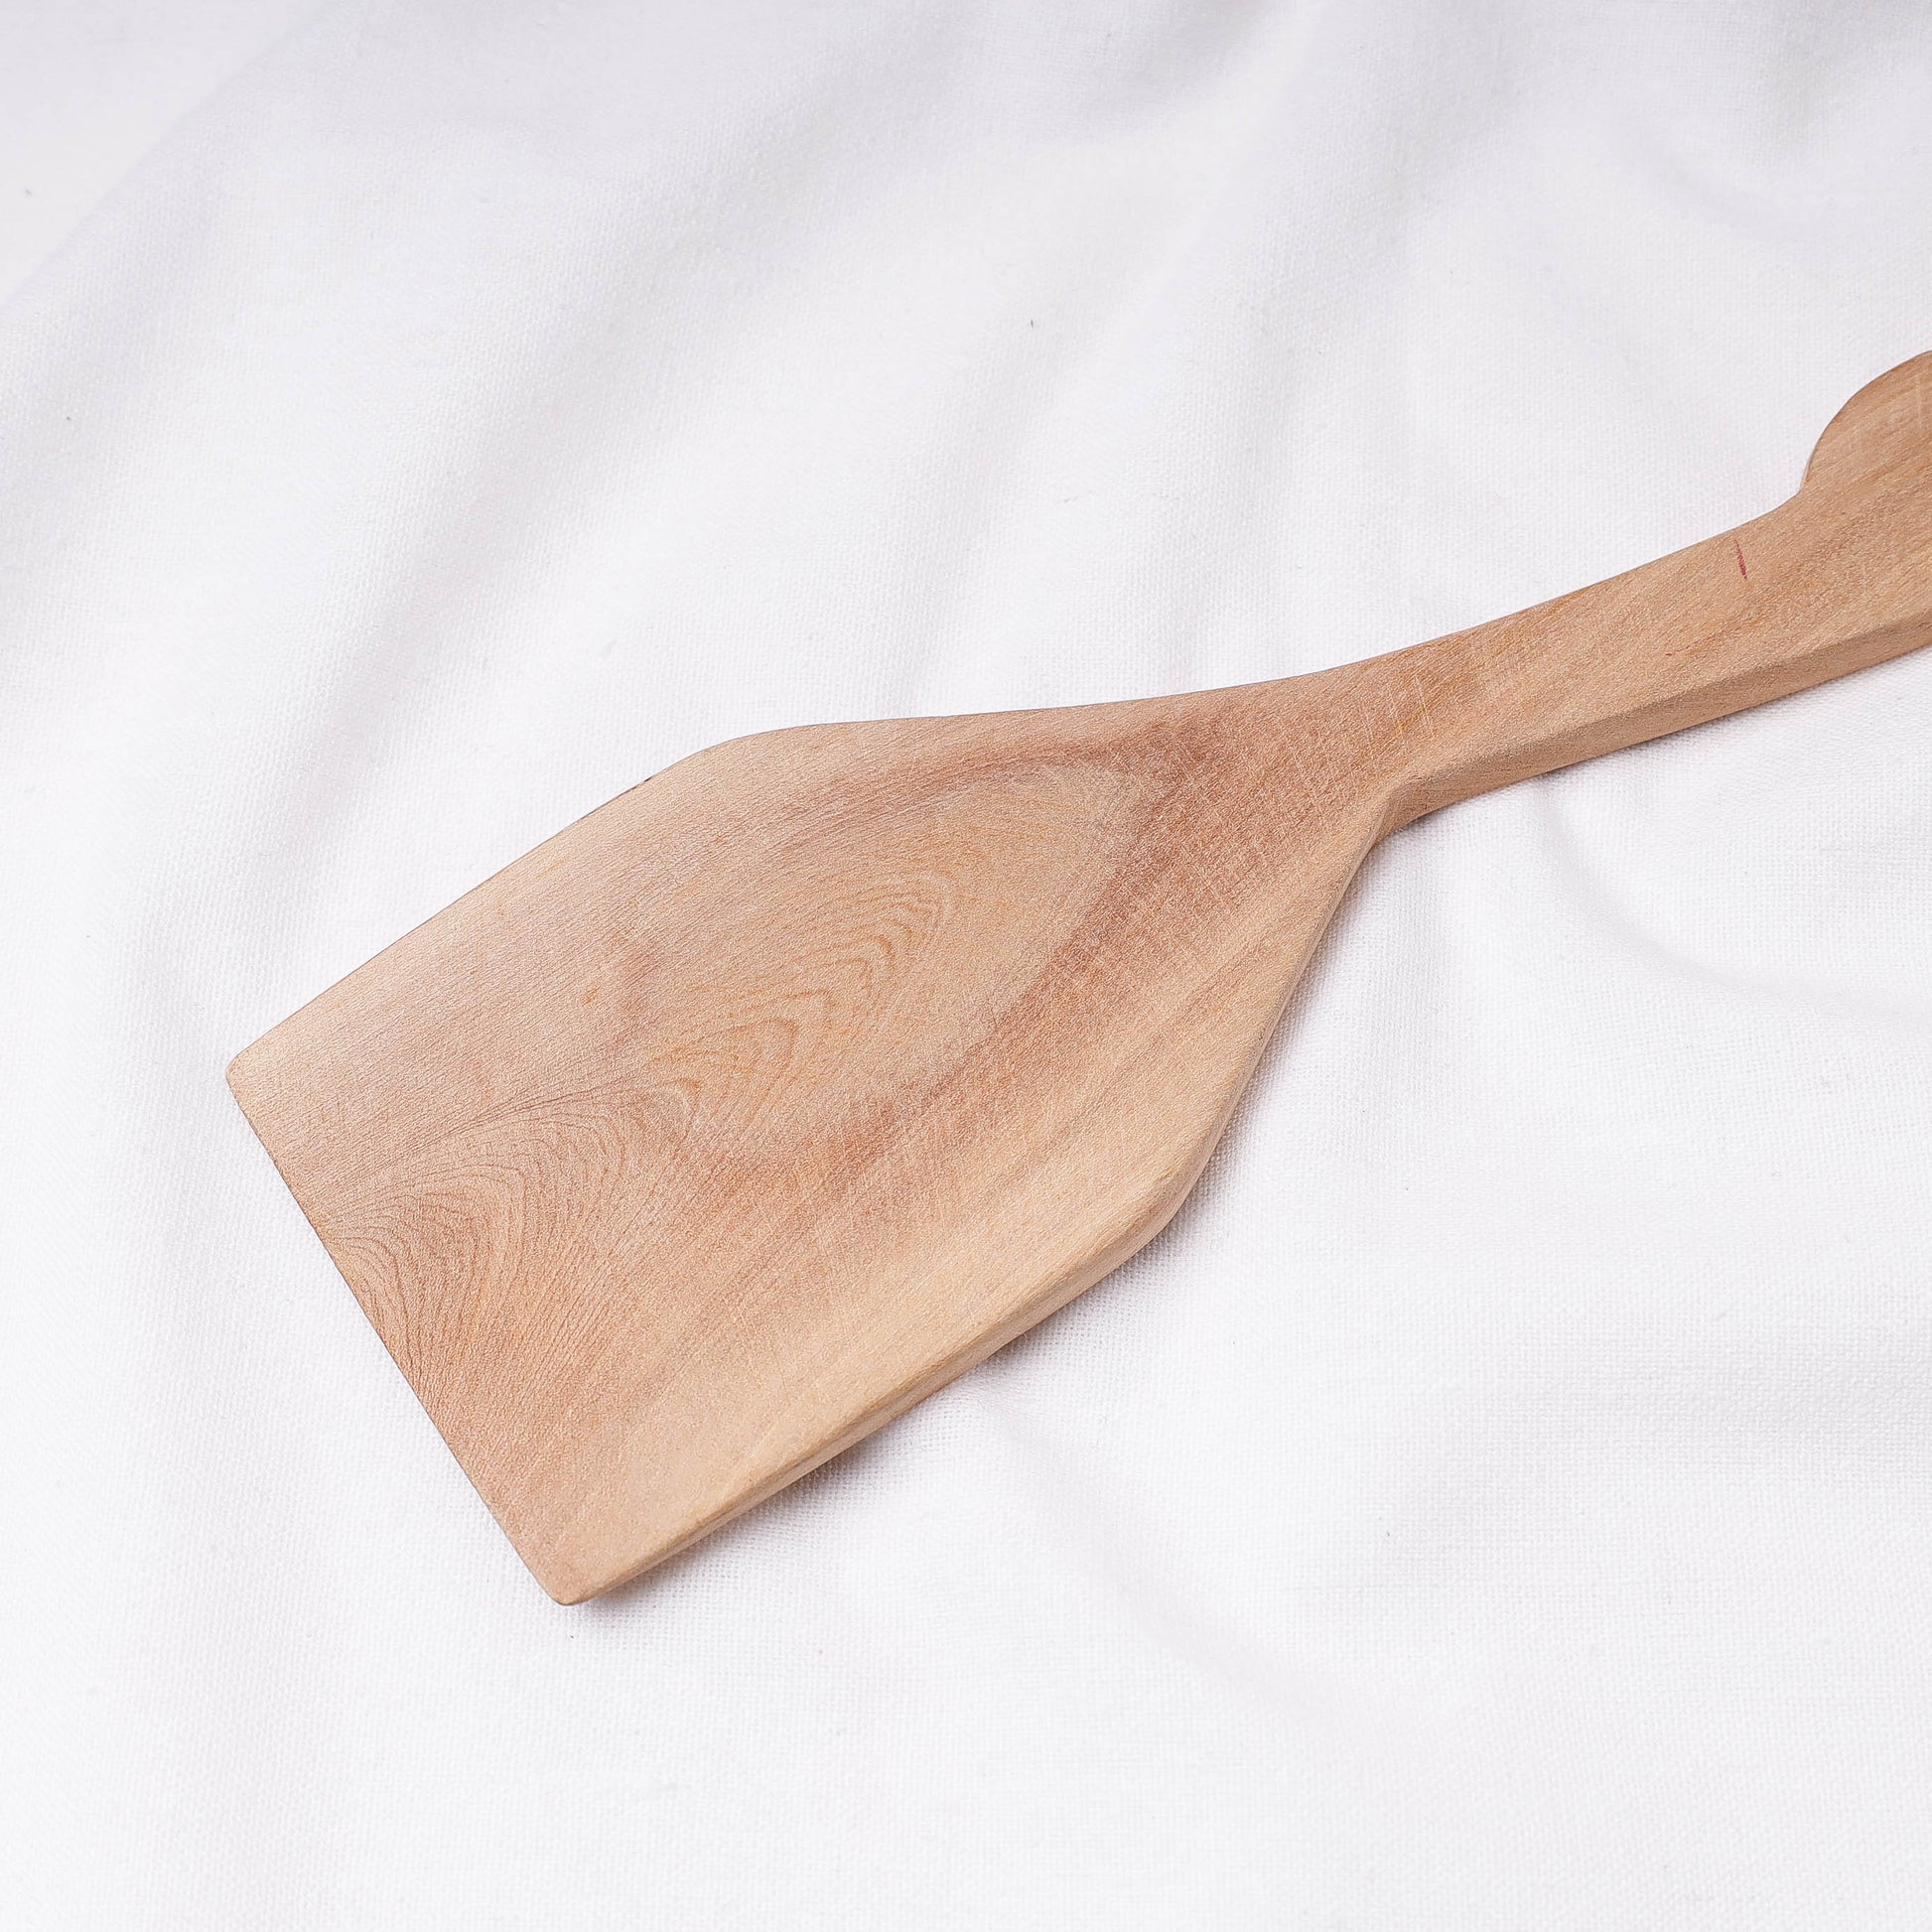 wooden spoon 